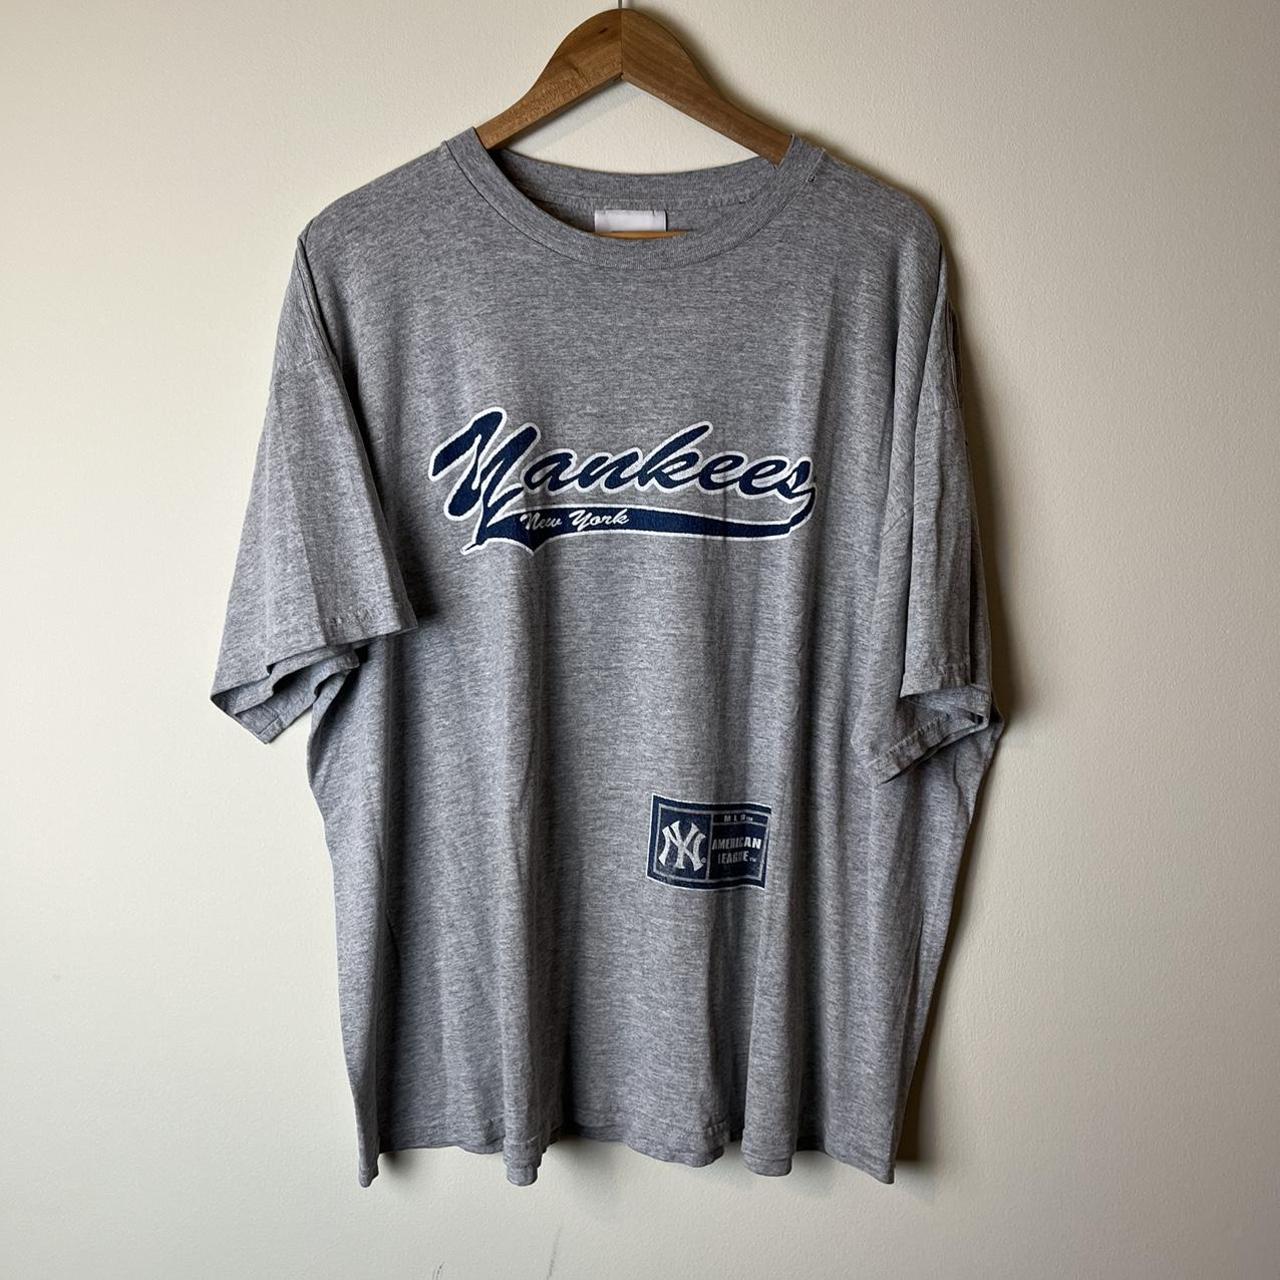 MLB T-Shirt - New York Yankees, 2XL